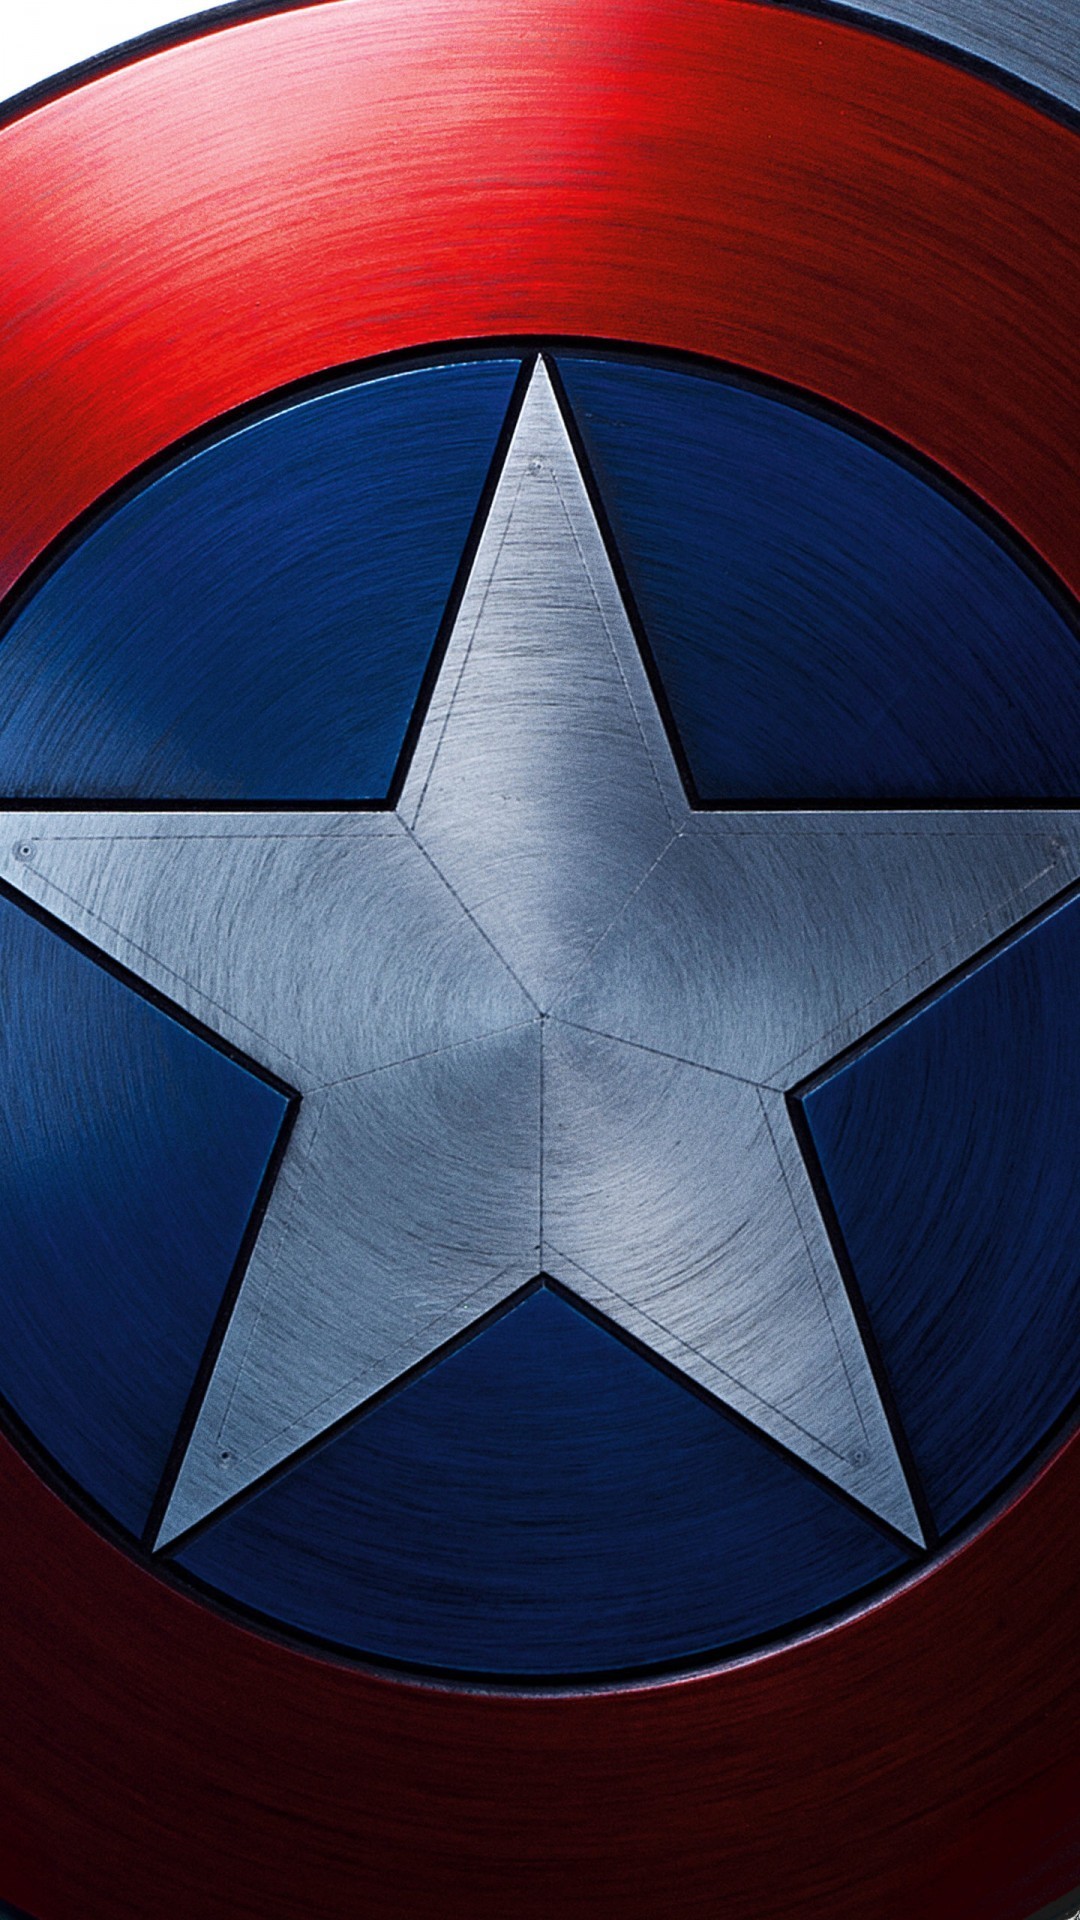 Captain America's Shield | wallpaper | Pinterest | Capt america and Rock